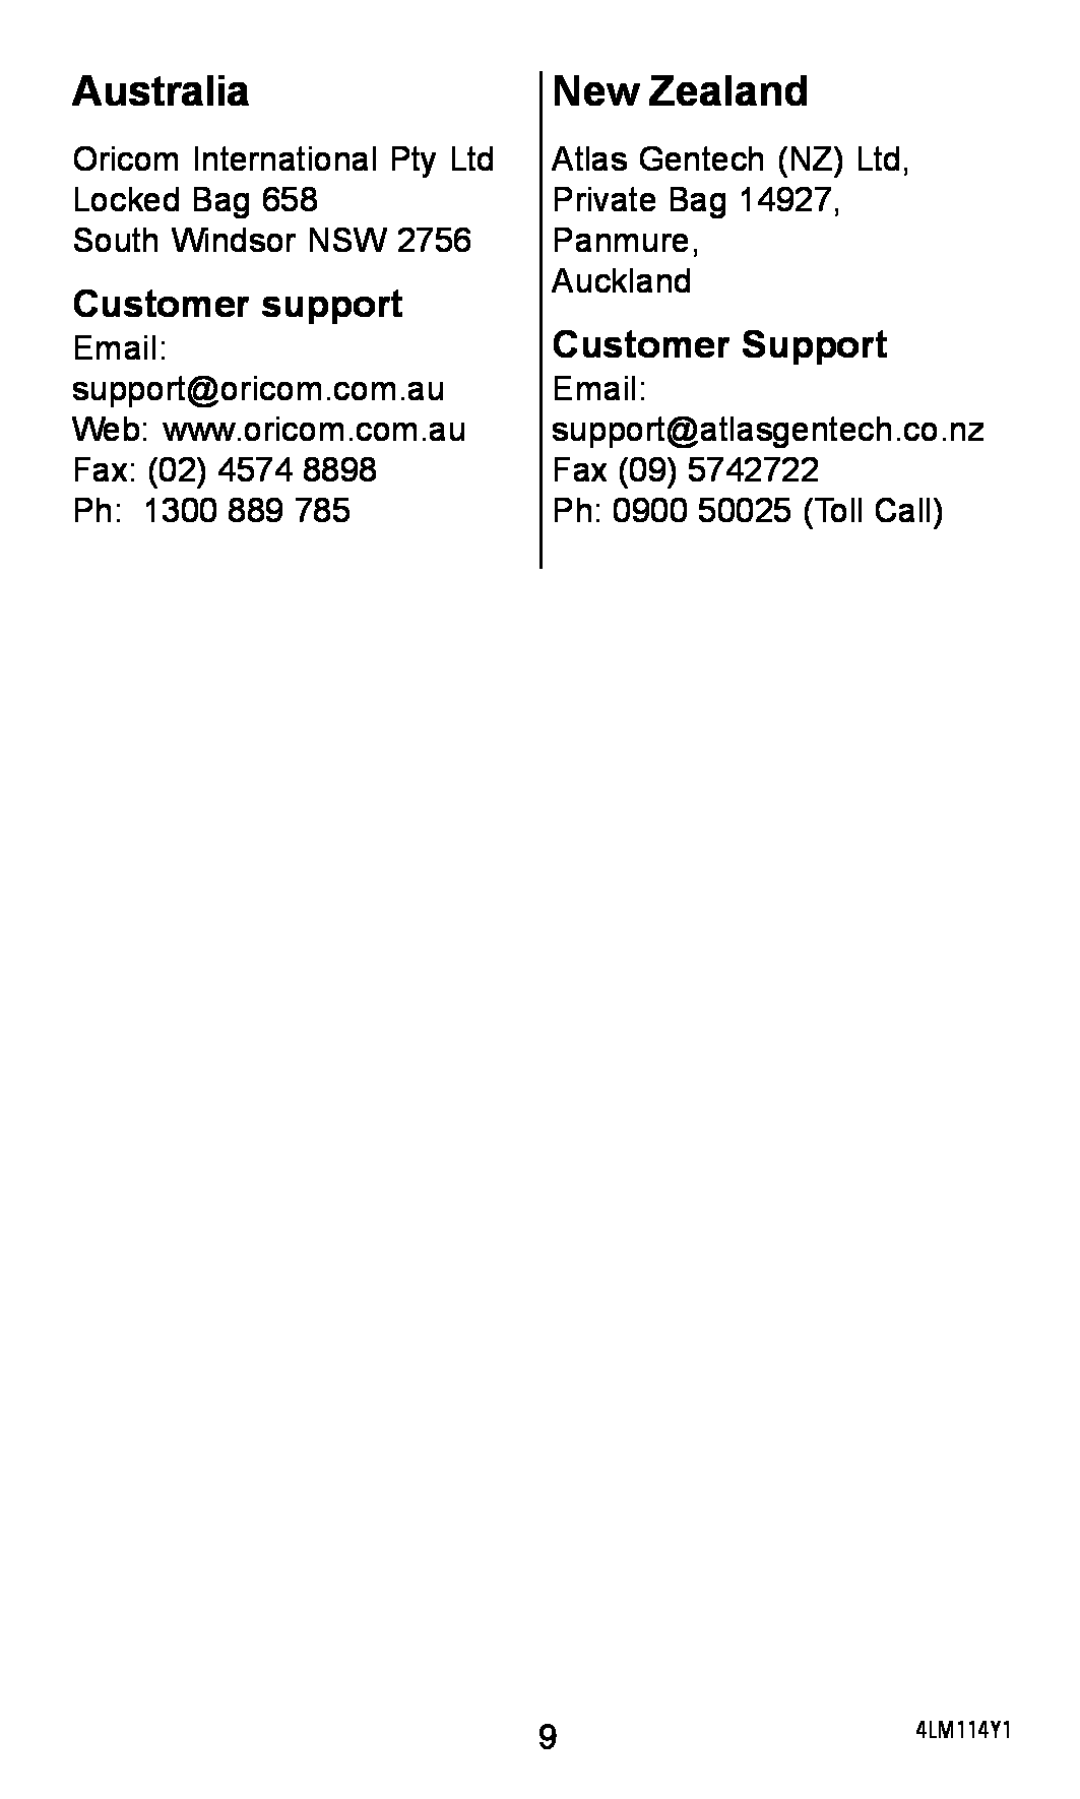 Oricom TP58 Australia, New Zealand, Customer support, Customer Support, Locked Bag South Windsor NSW, Email, Ph 1300 889 